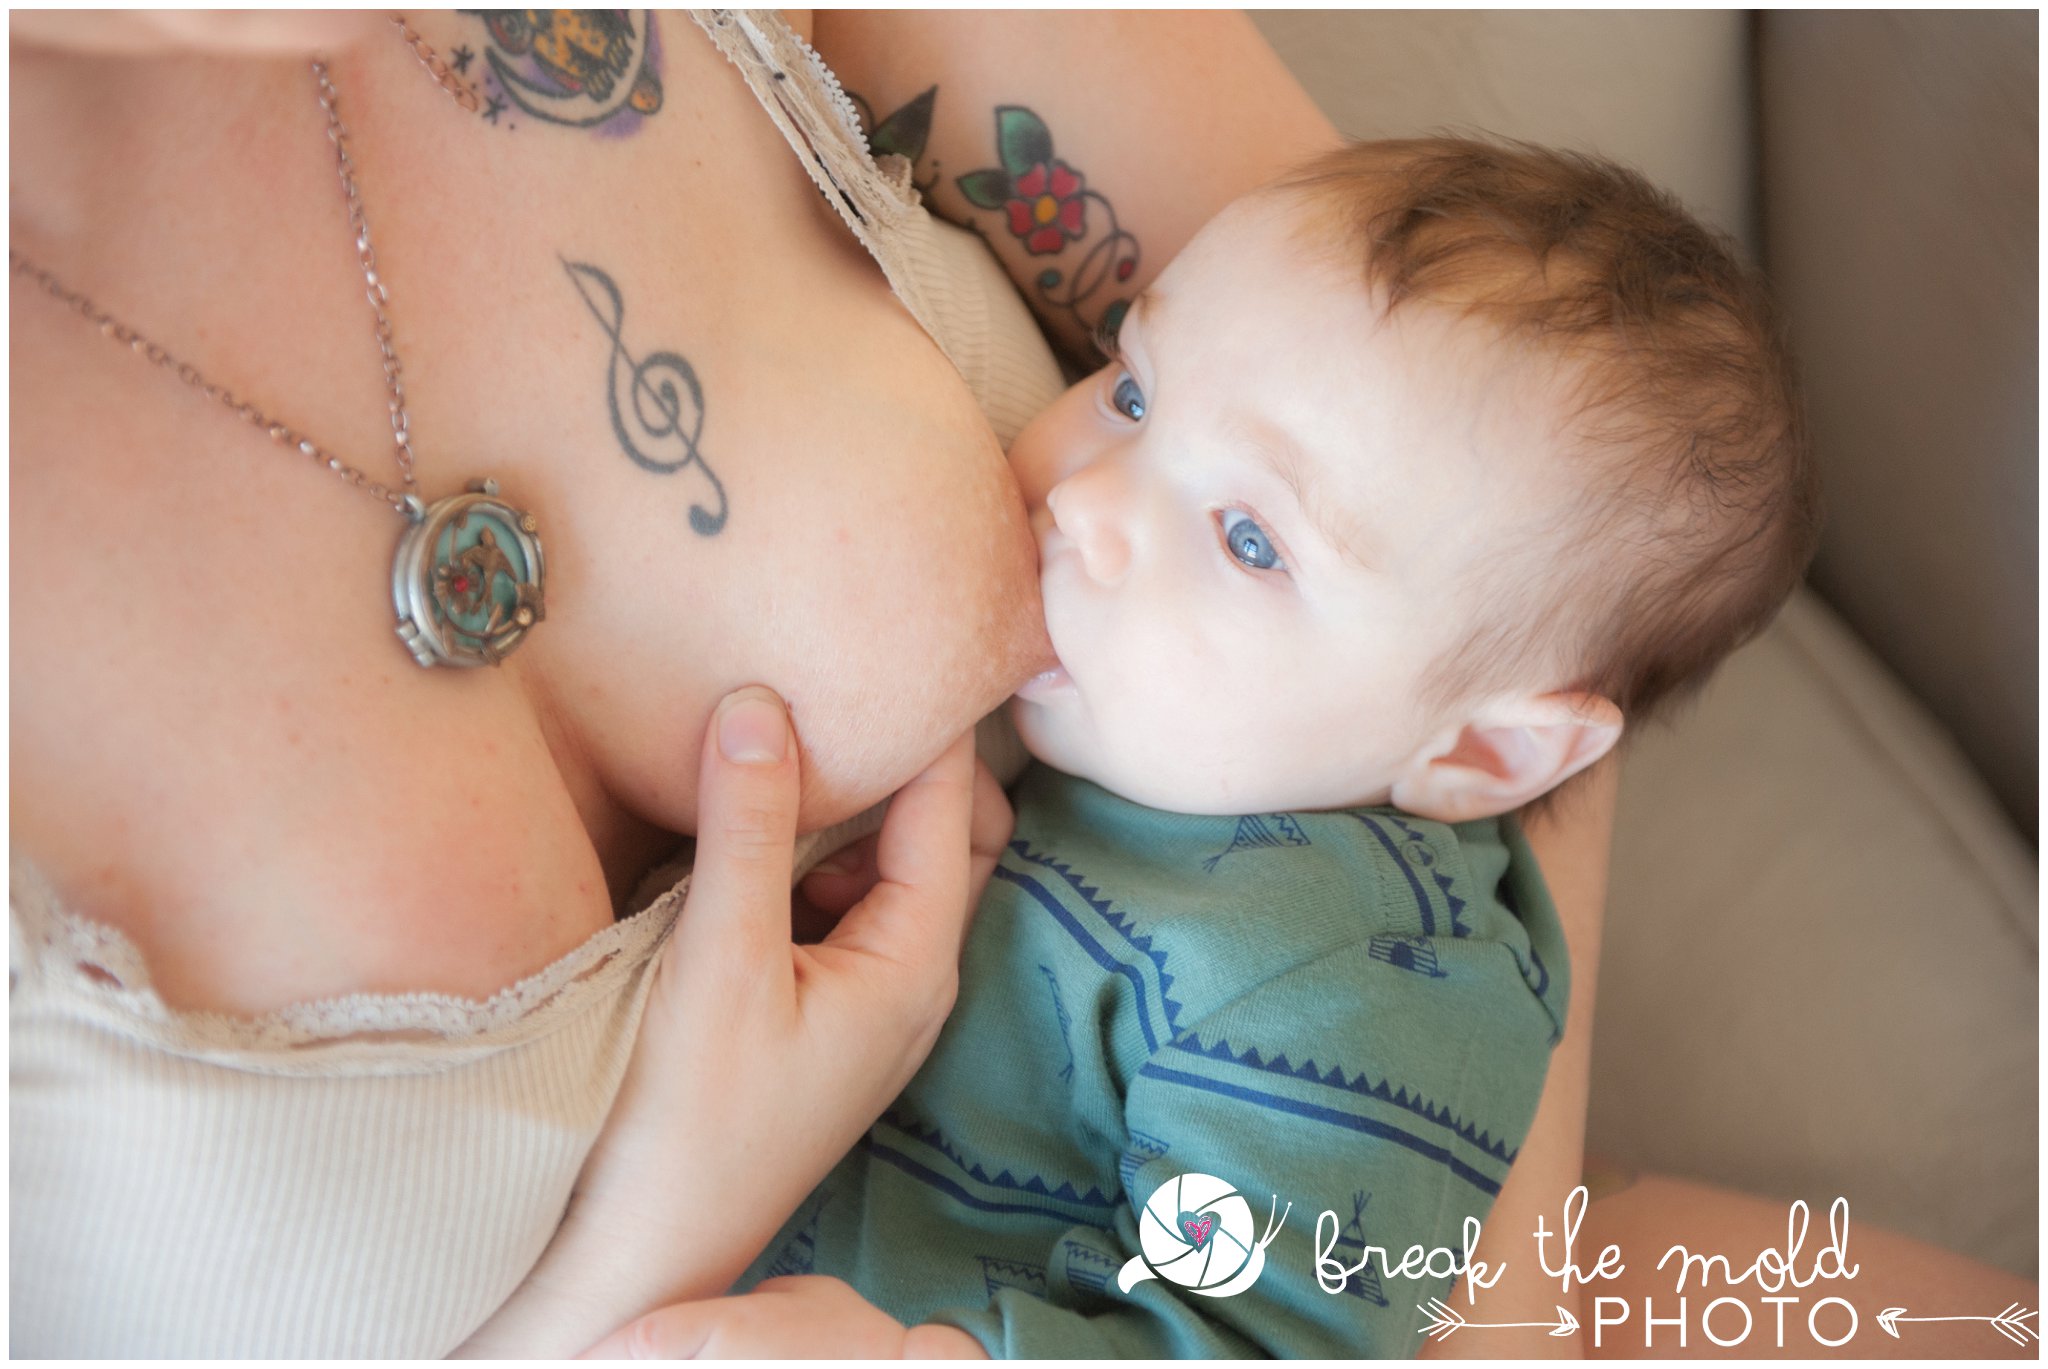 break-the-mold-photo-nursing-body-love-baby-pregnant-women-powerful-breastfeeding-sessions_7229.jpg